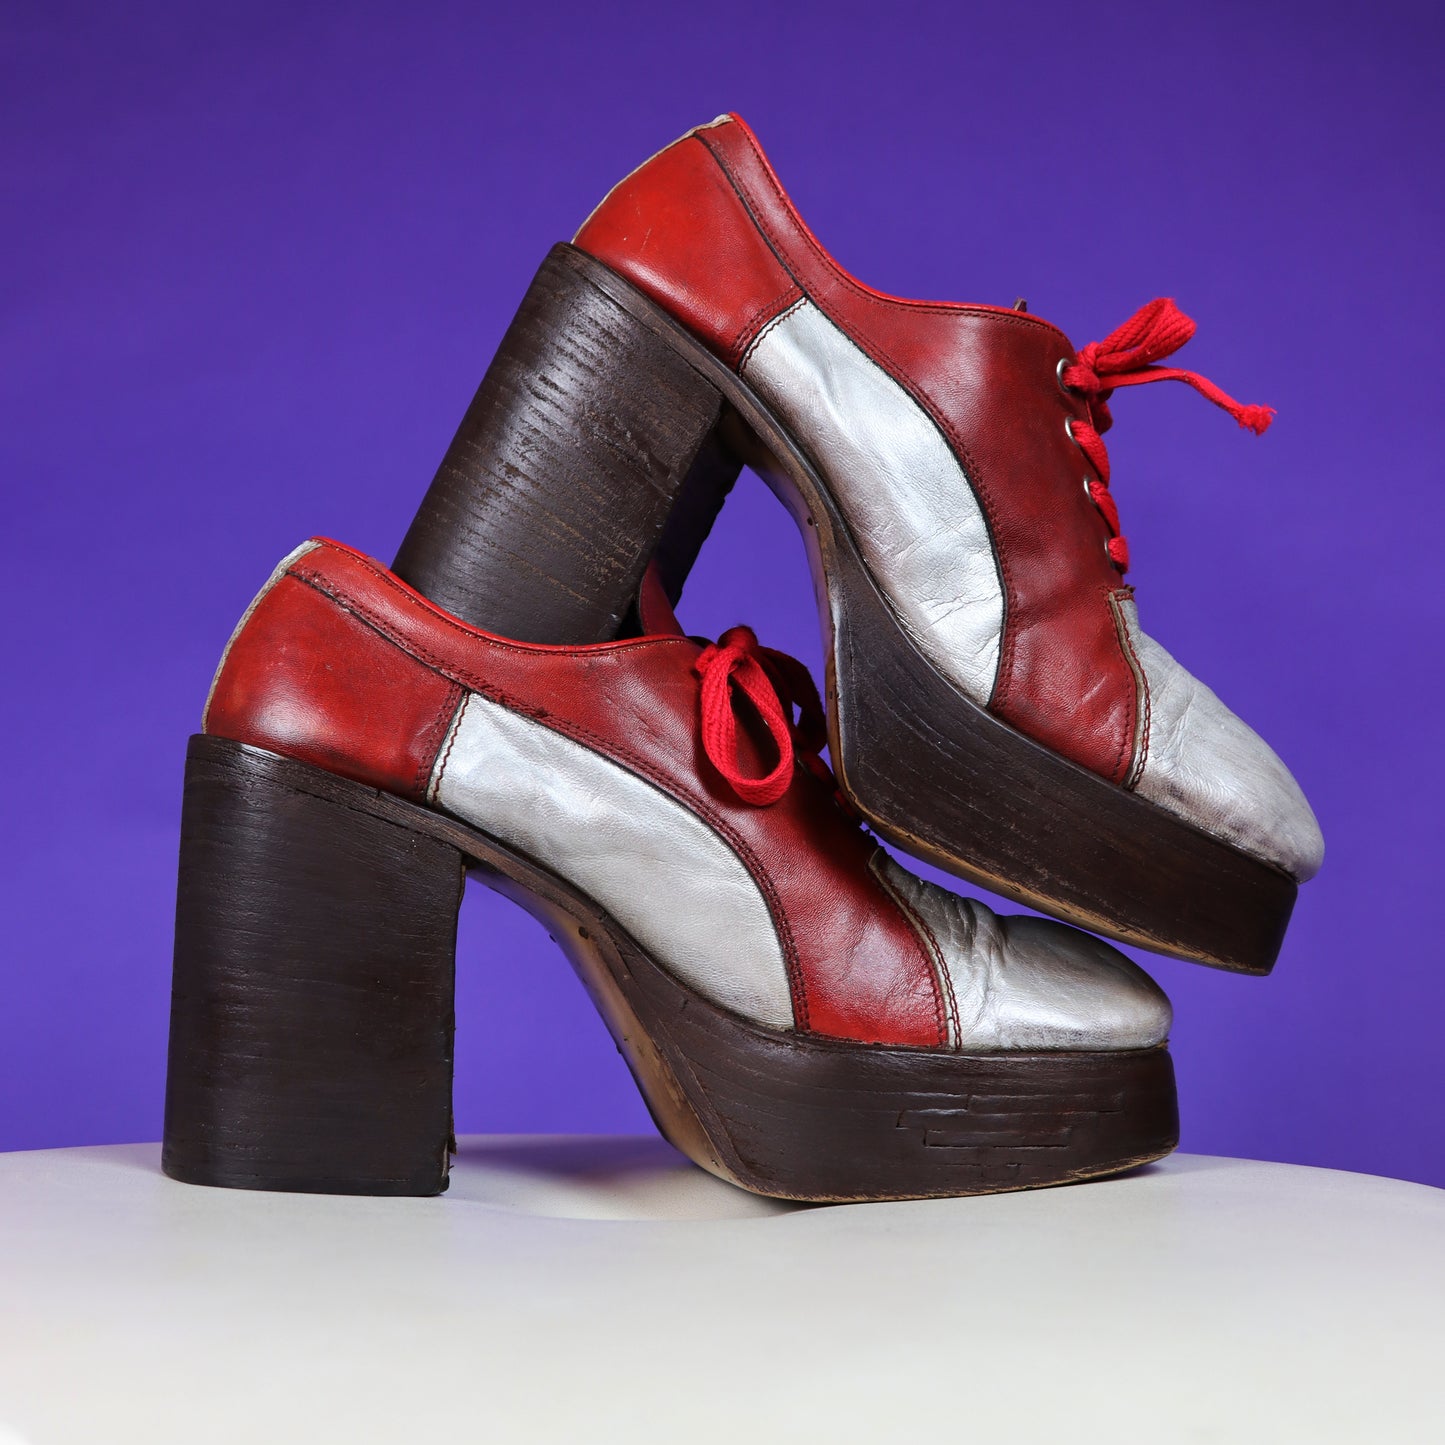 RESEVED: Vintage 1970s Red and Silver Platform Shoes uk 6